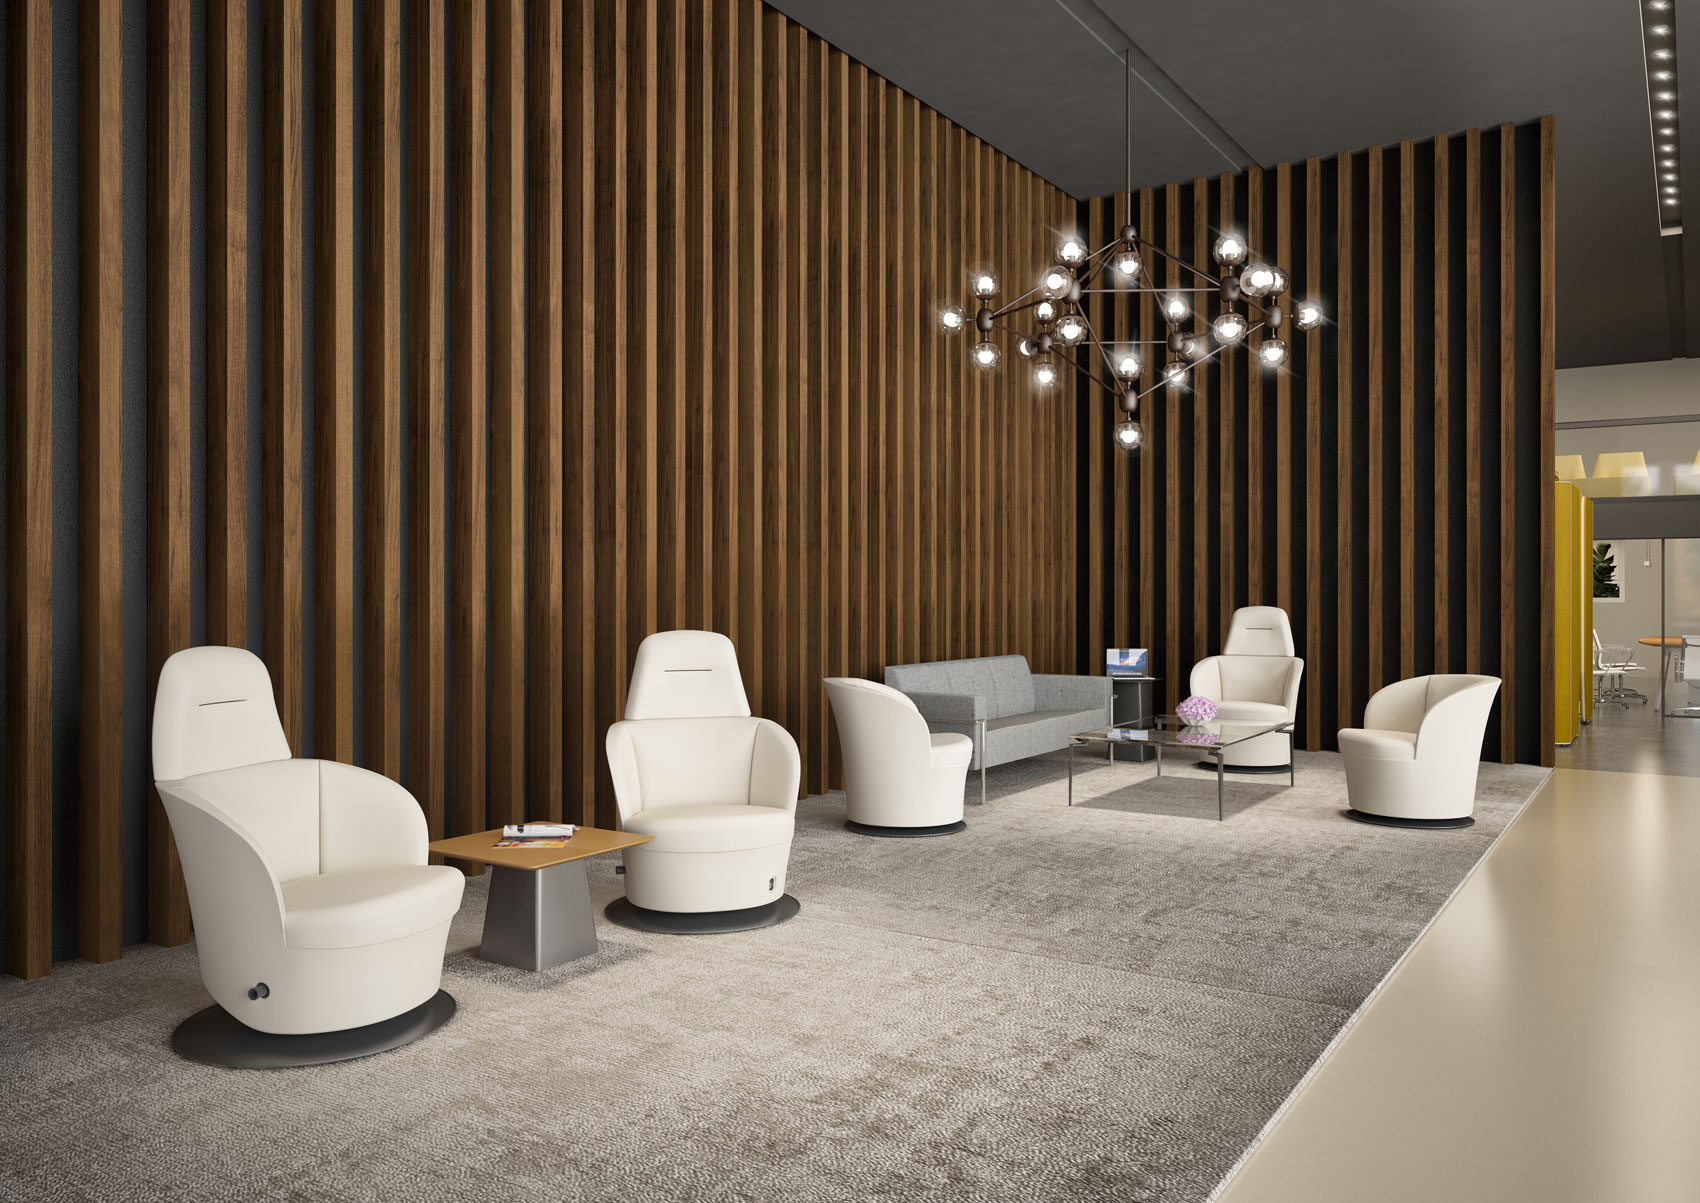 Swell Tilt armchair and Standard version in a luxurious lobby area